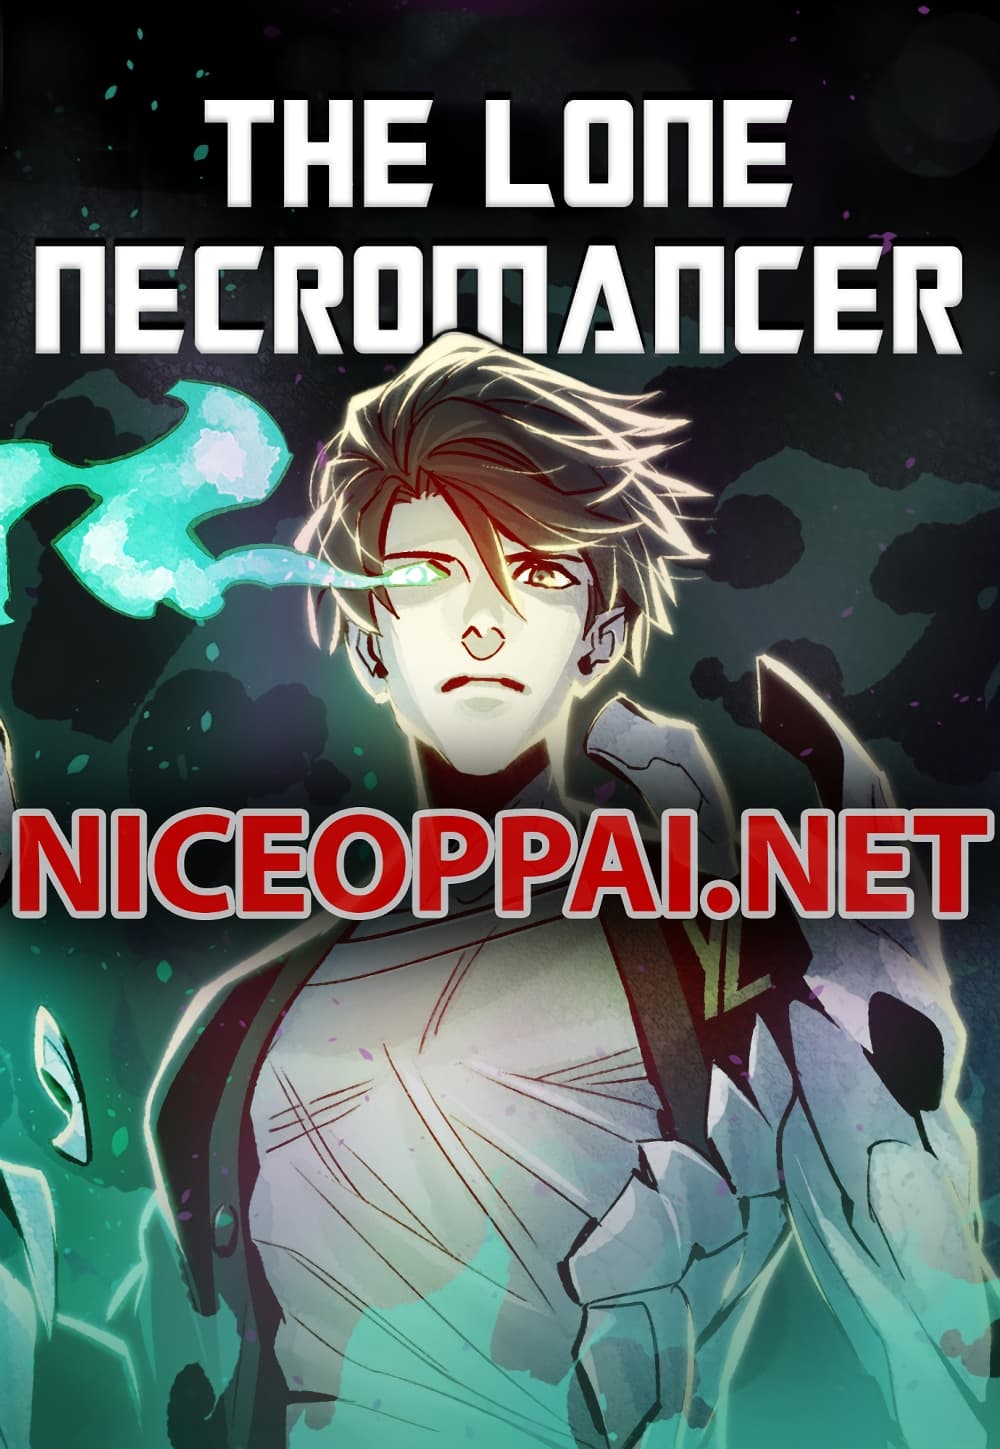 The Lone Necromancer 26-26